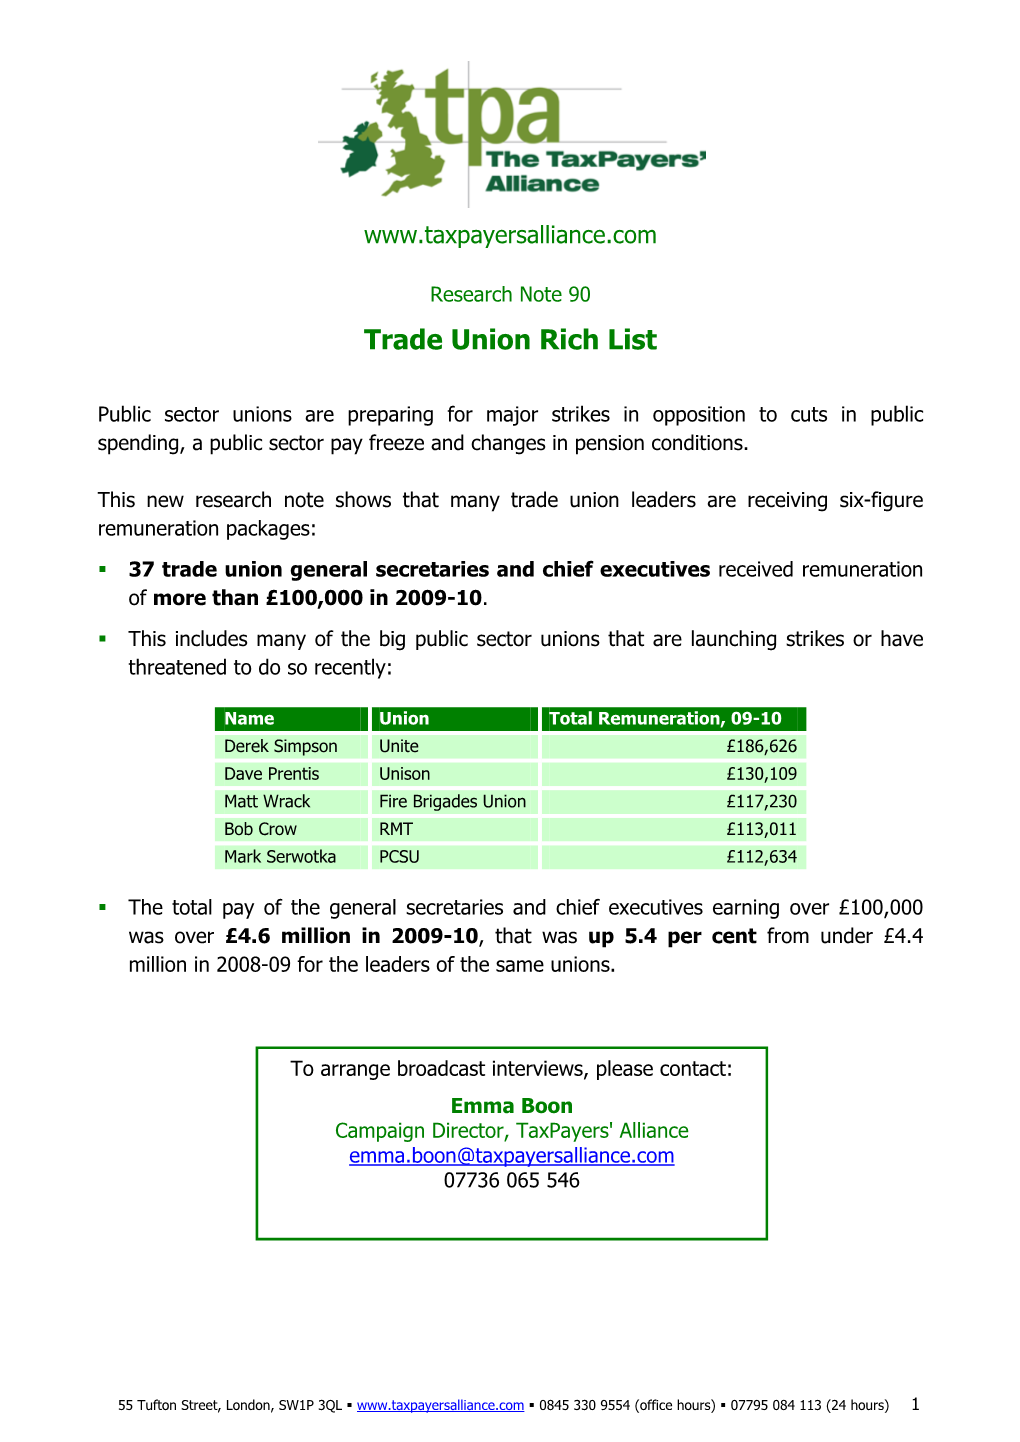 Trade Union Rich List June 2011